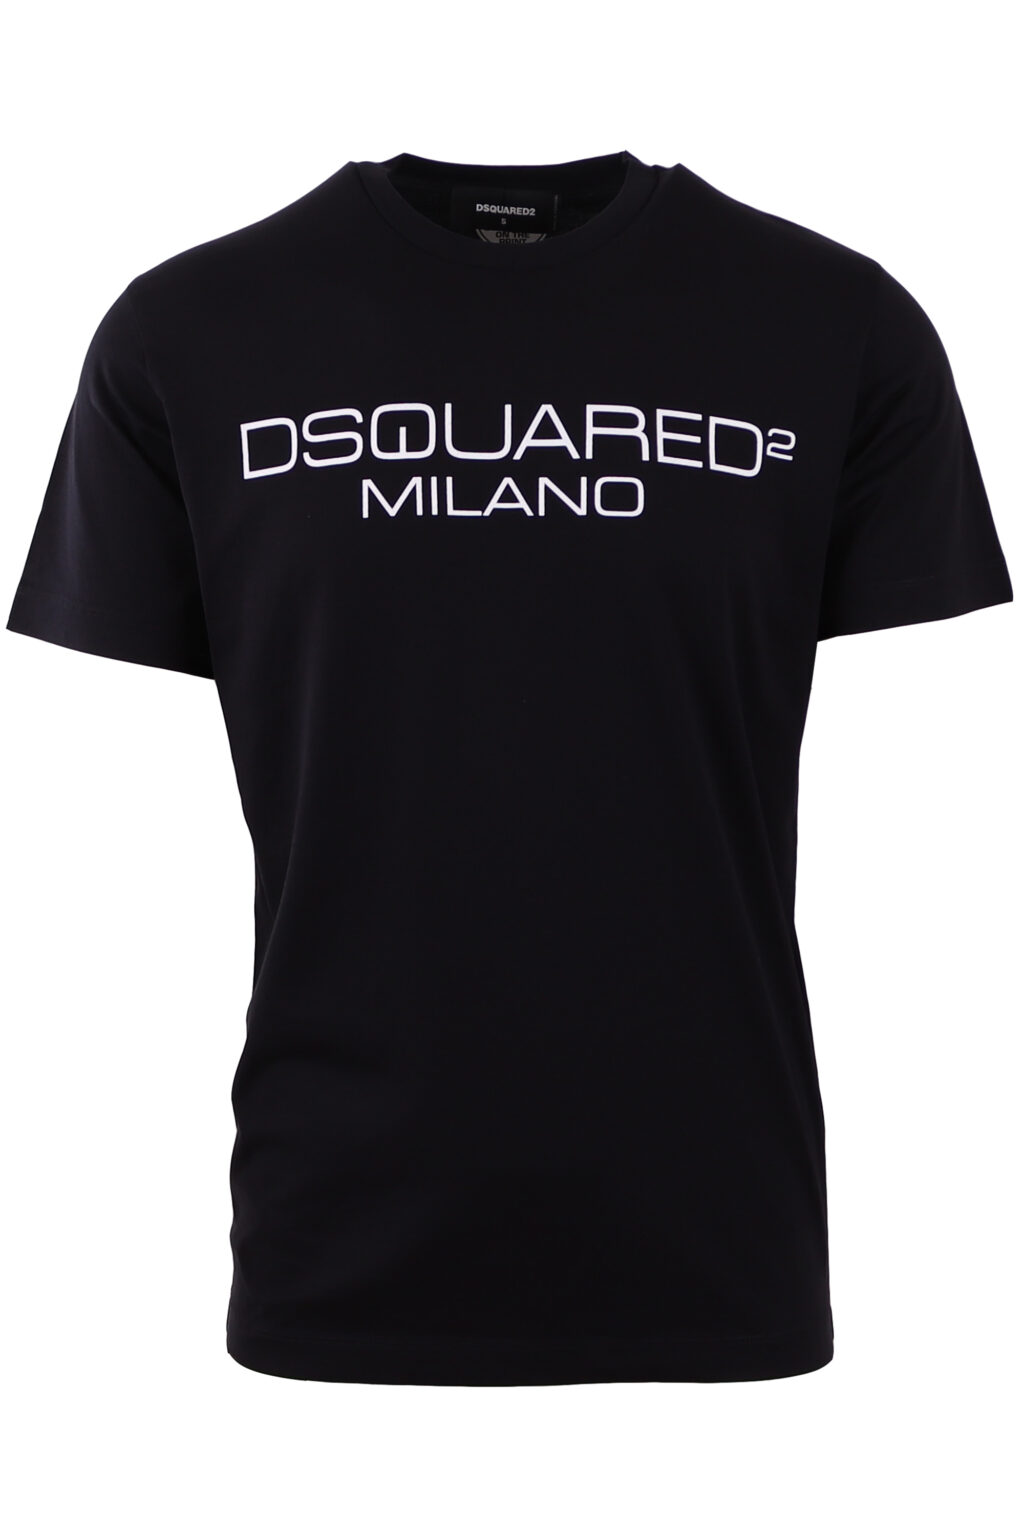 Dsquared2 - Camiseta negra maxilogo 